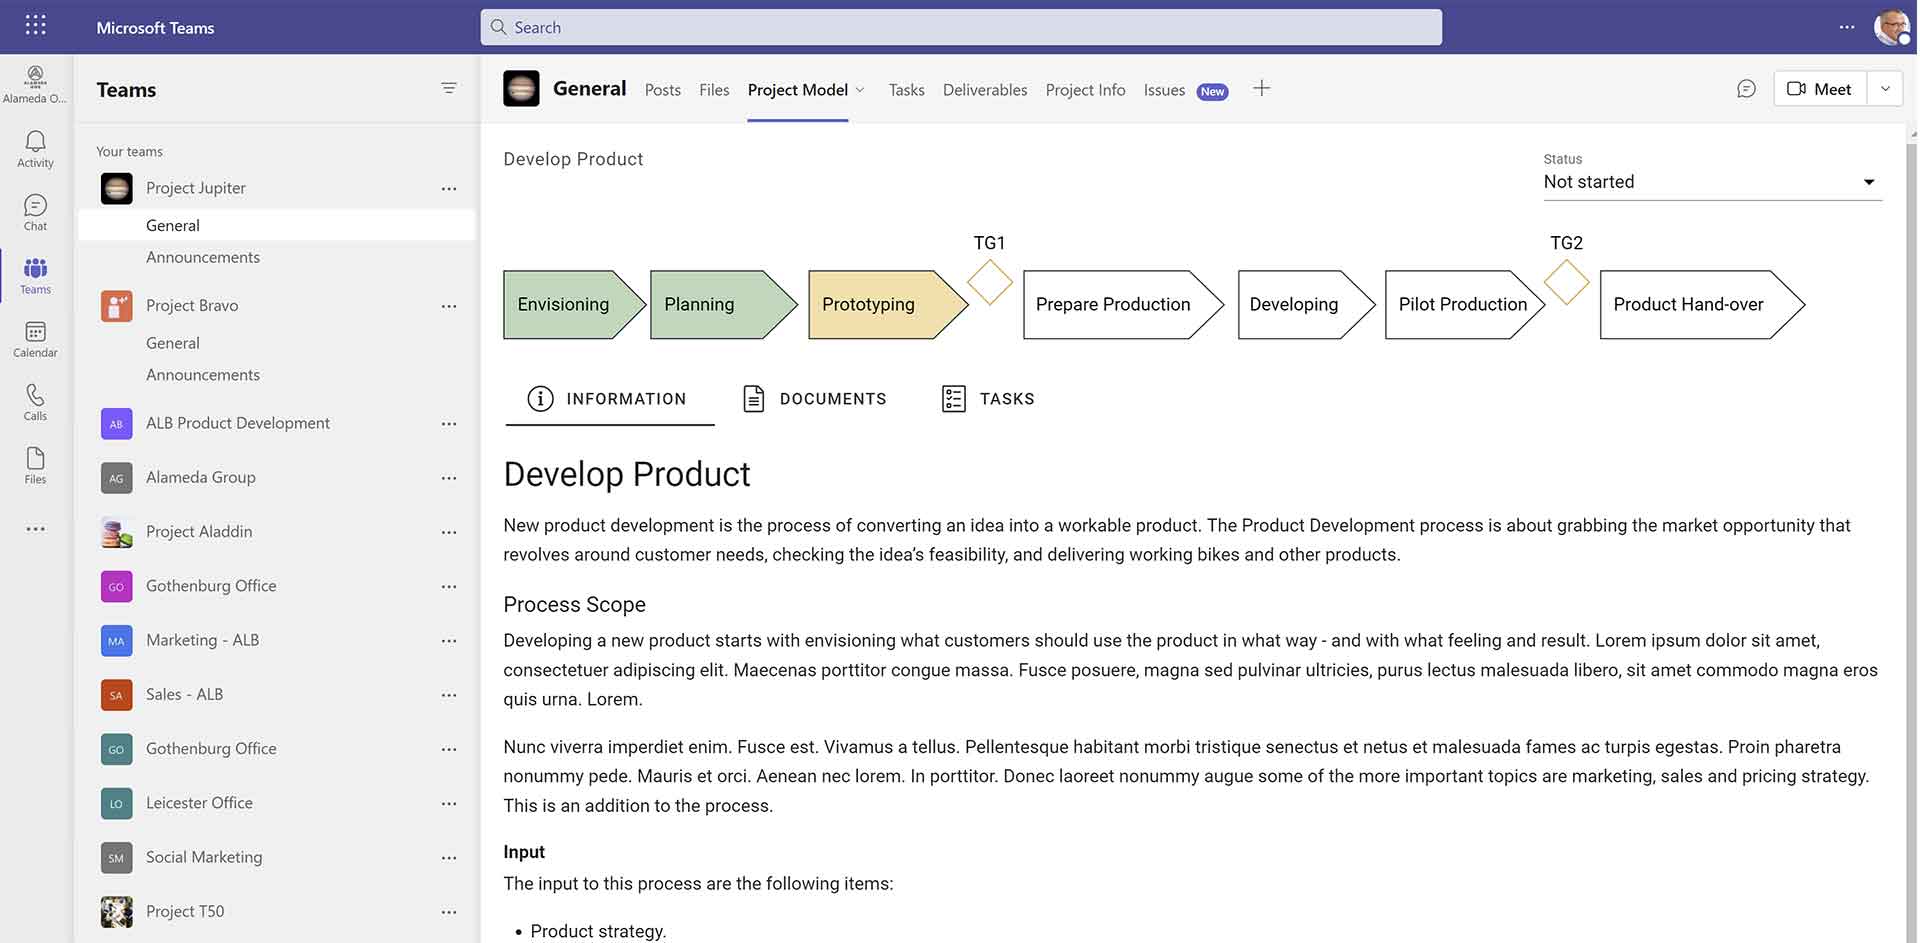 Bild 4 - Projektfortschritt in Microsoft Teams